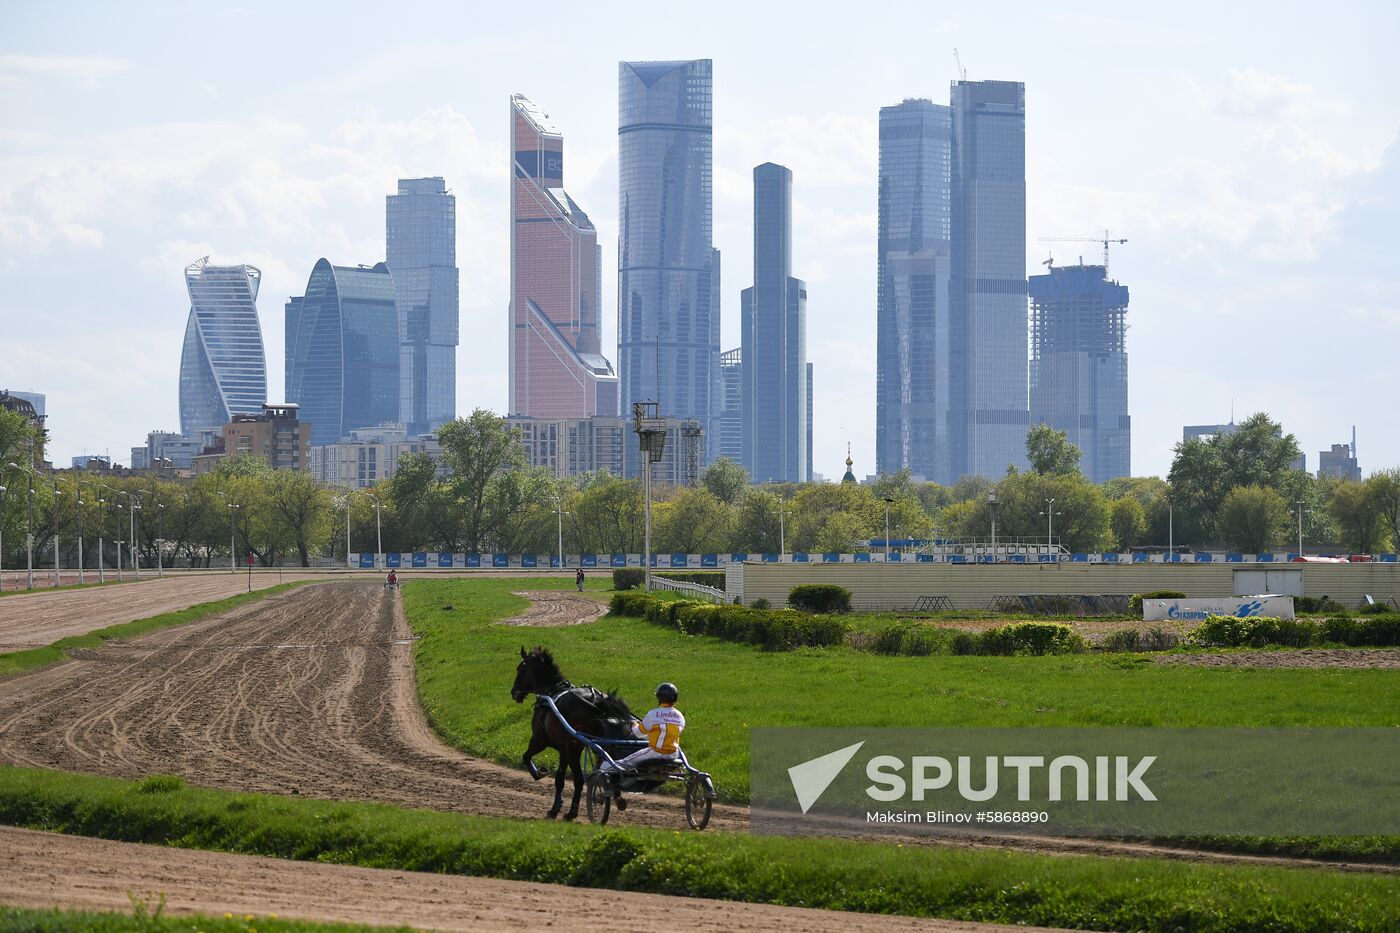 Russia Horse Race